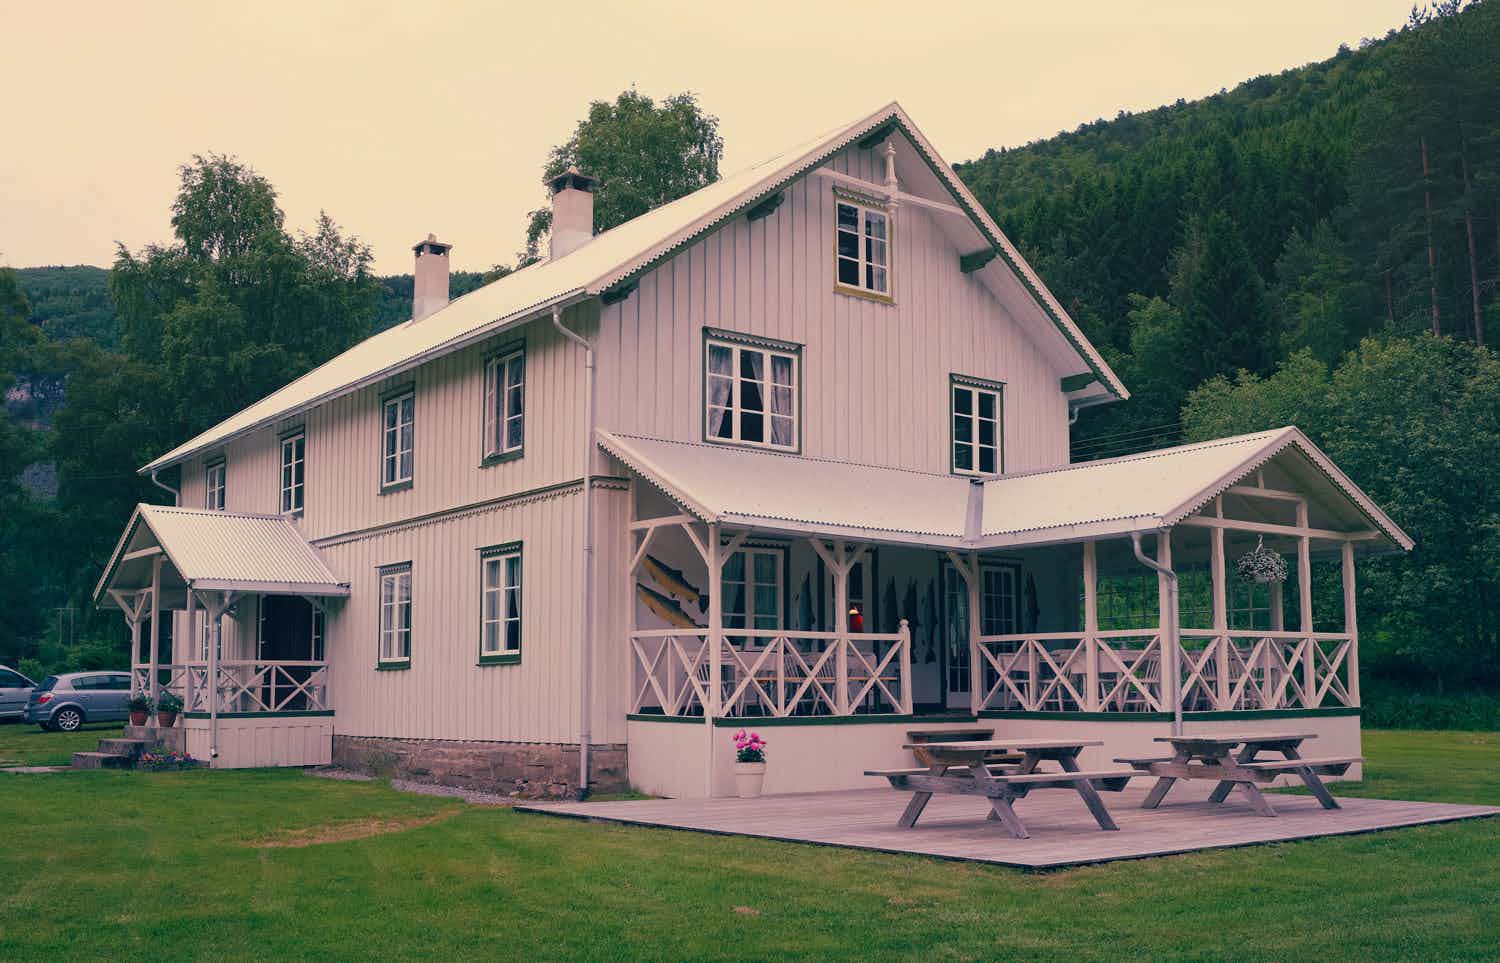 Nyheim Lodge